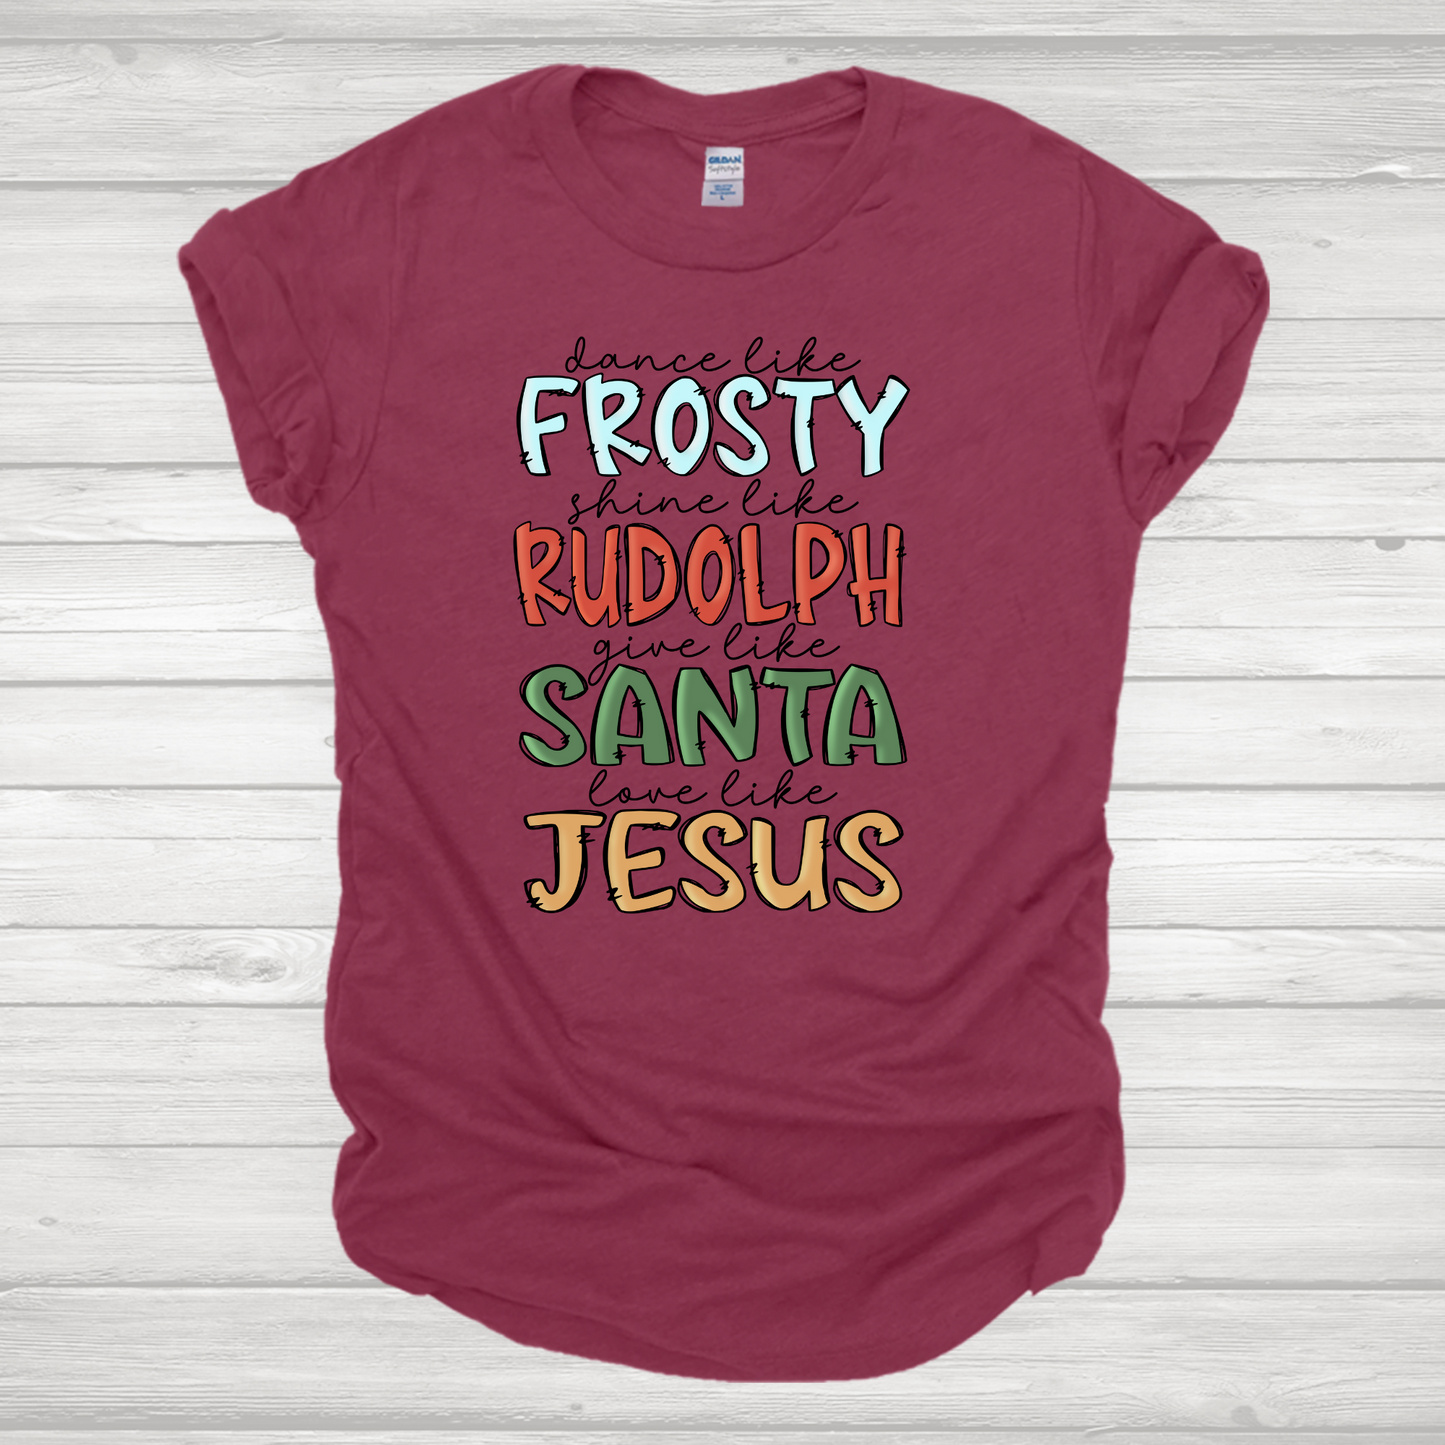 Frosty Rudolph Santa Jesus 2 Transfer